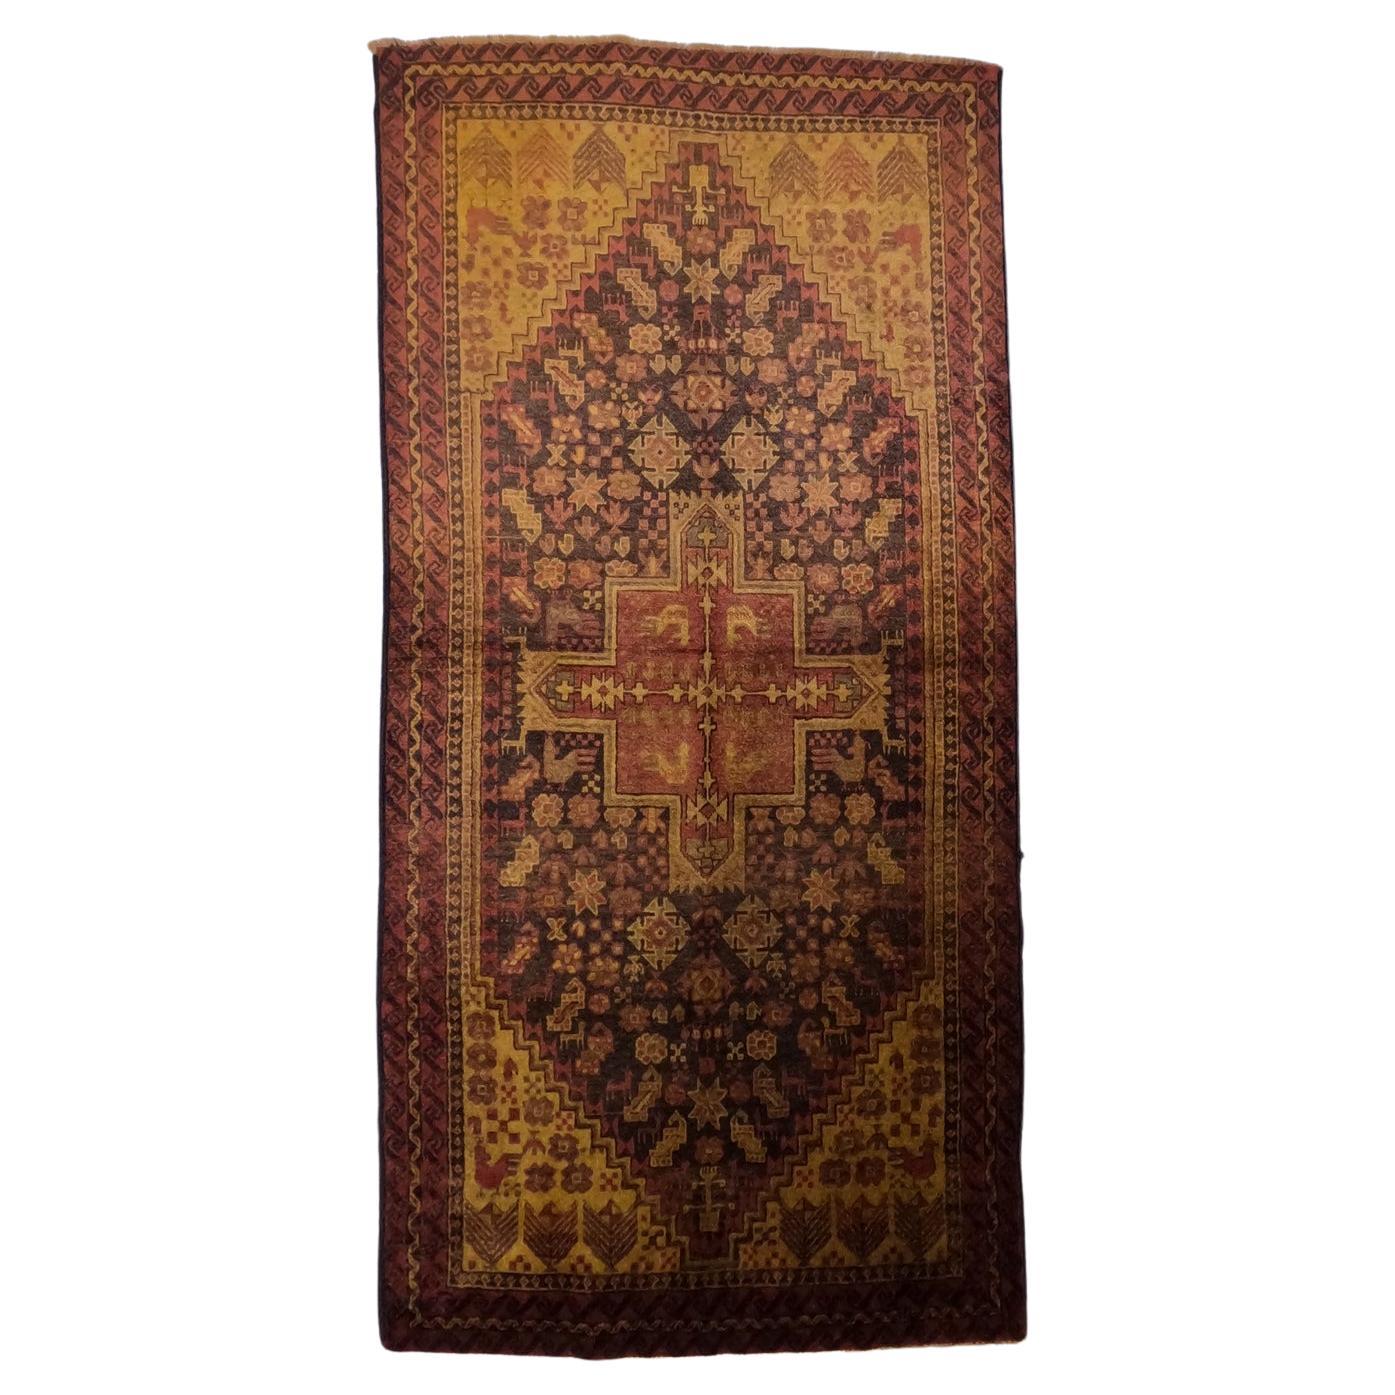 Camel and Lamb Wool Pashimineh Carpet Vintage Semi Antique Baluch